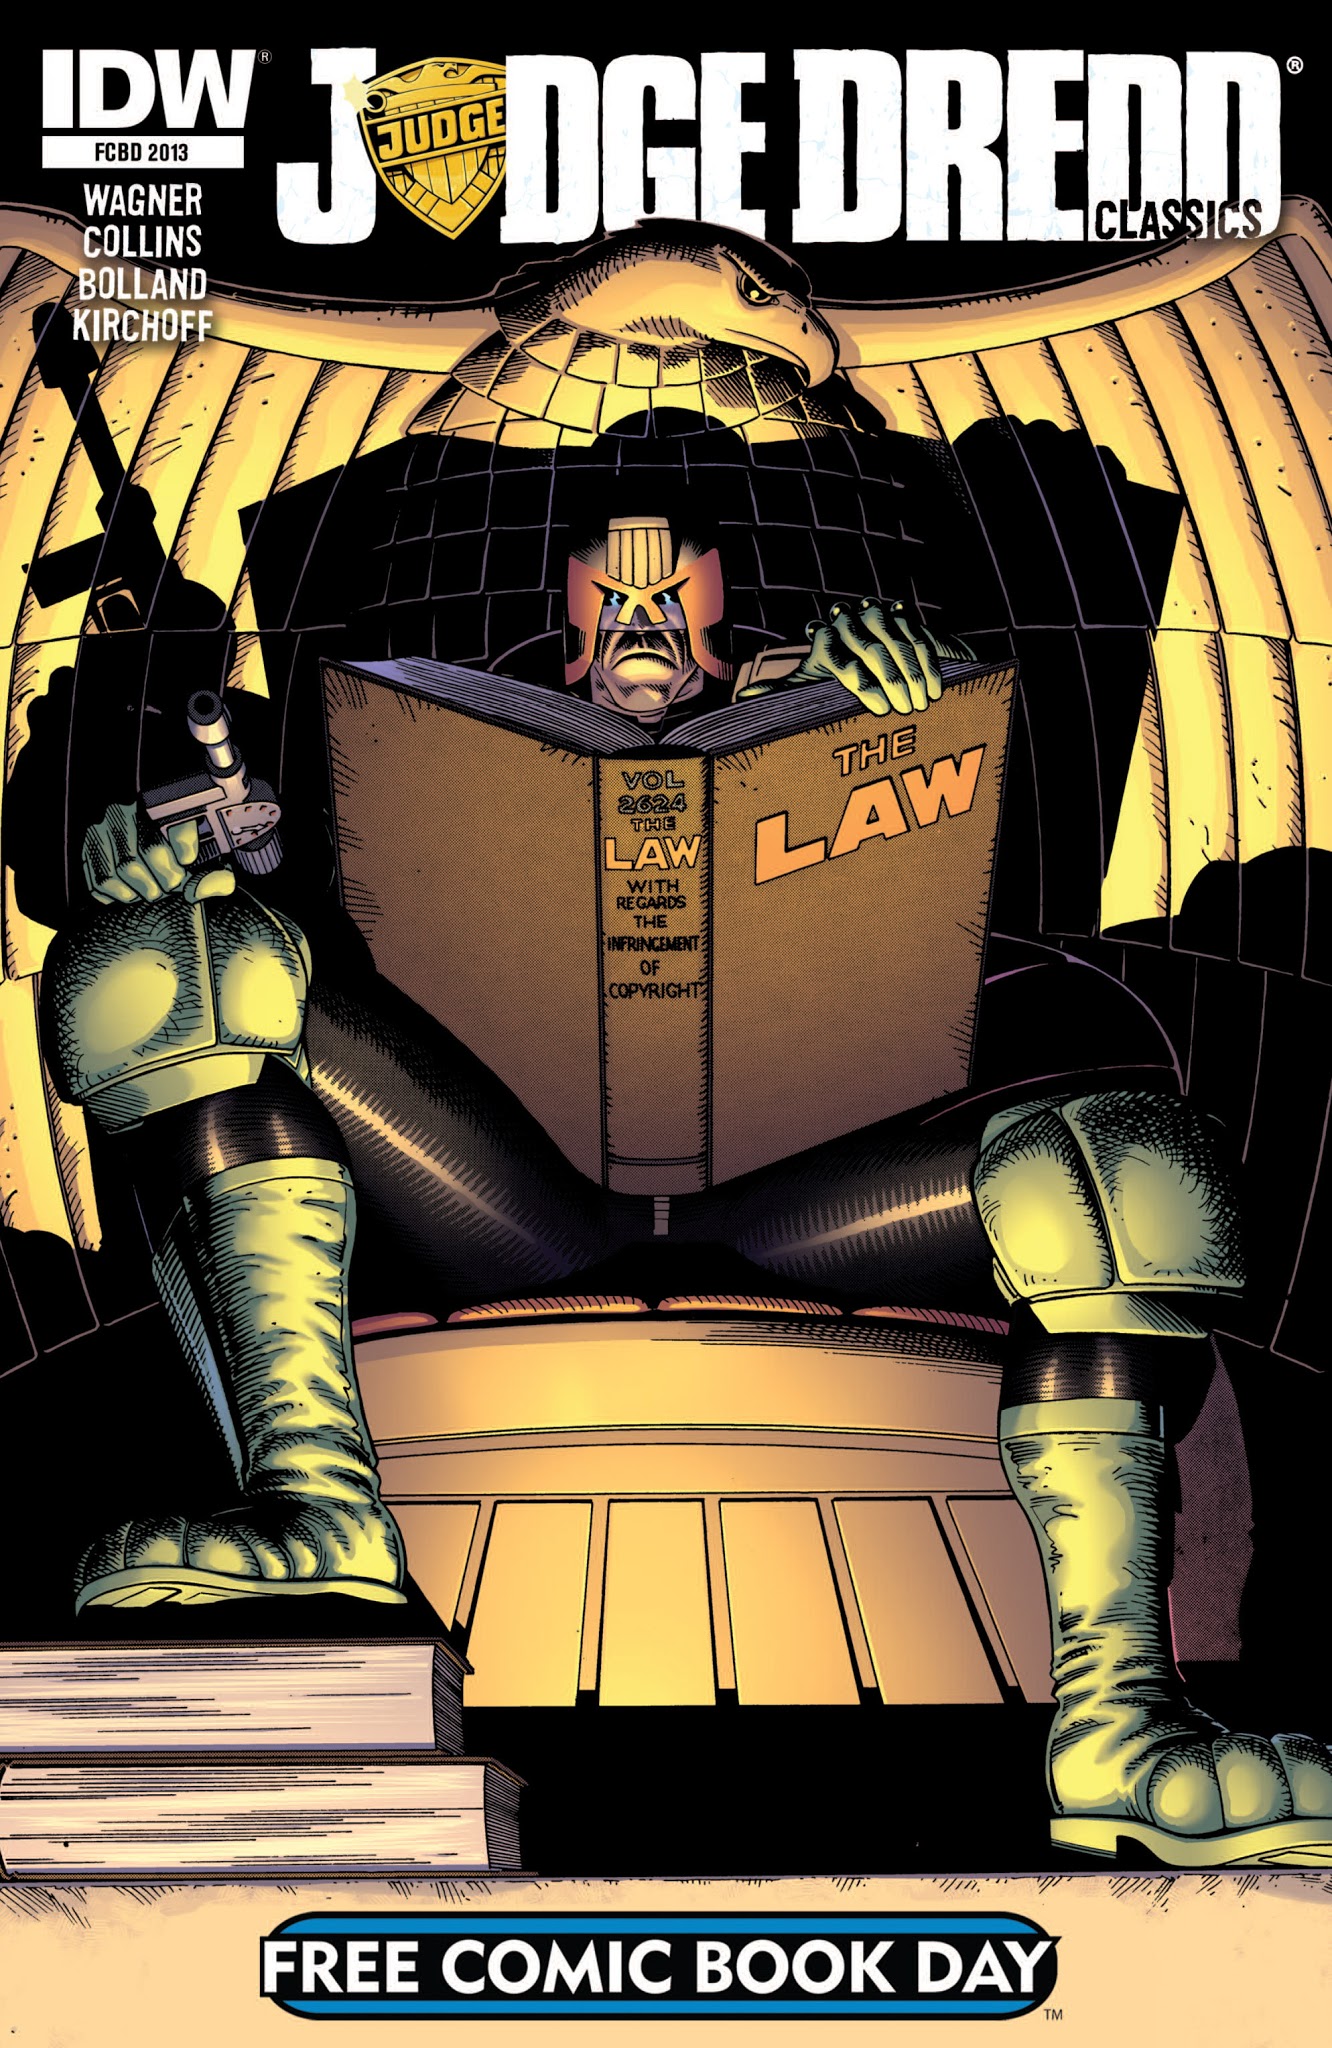 Read online Free Comic Book Day 2013: Judge Dredd Classics comic -  Issue # Full - 1